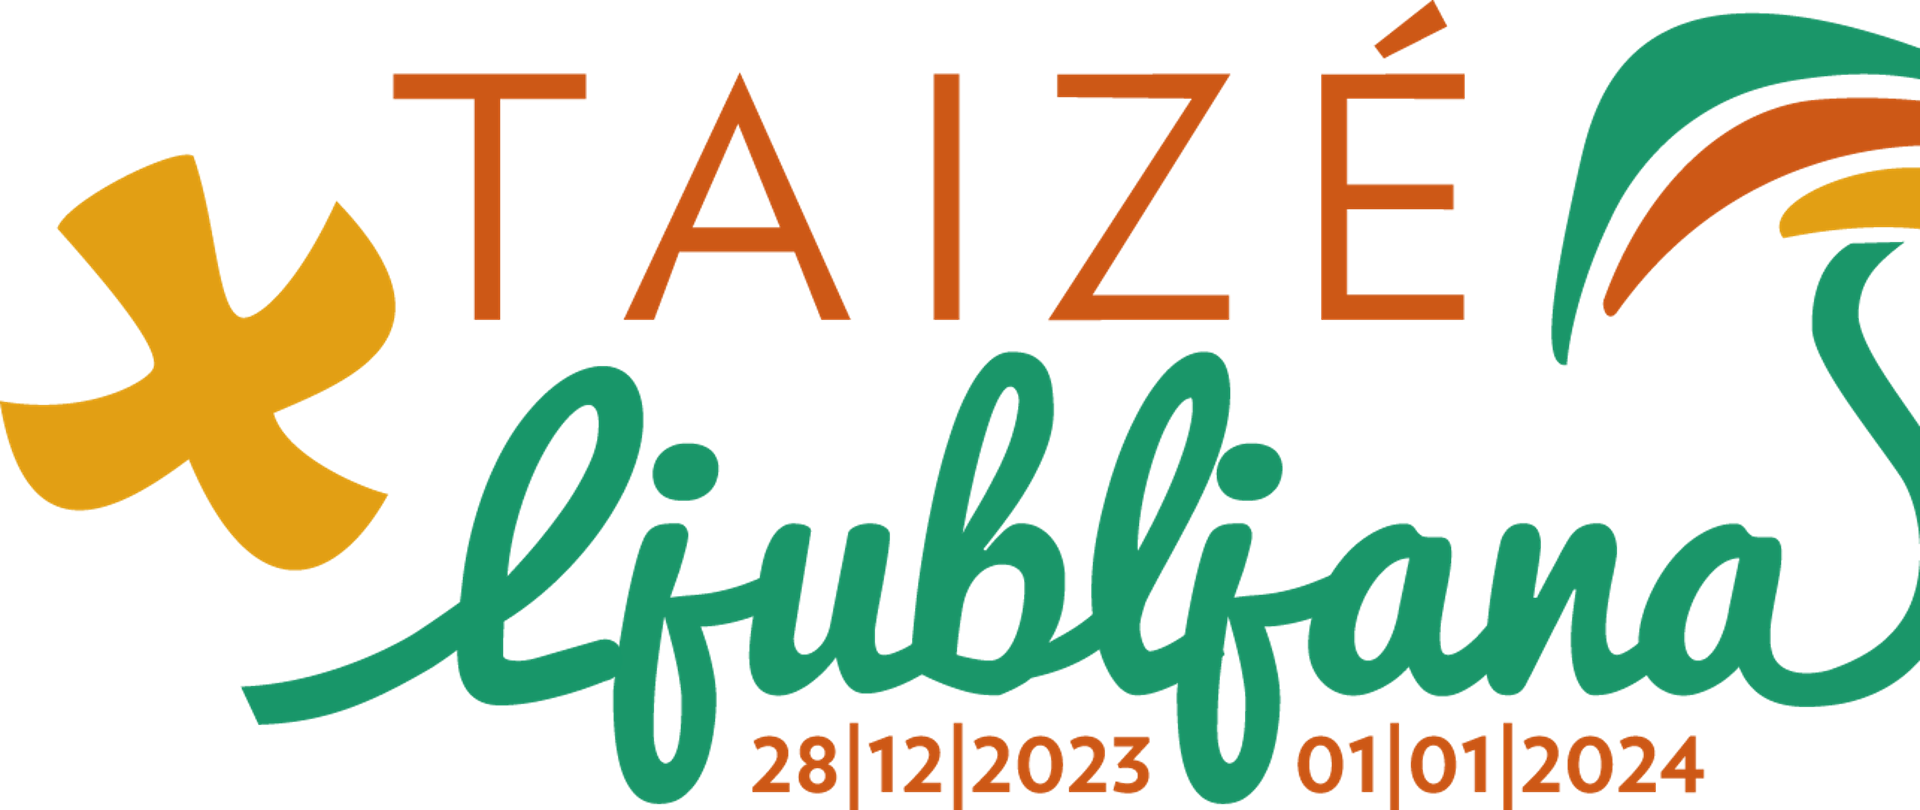 logo_ljubljana_final_taize